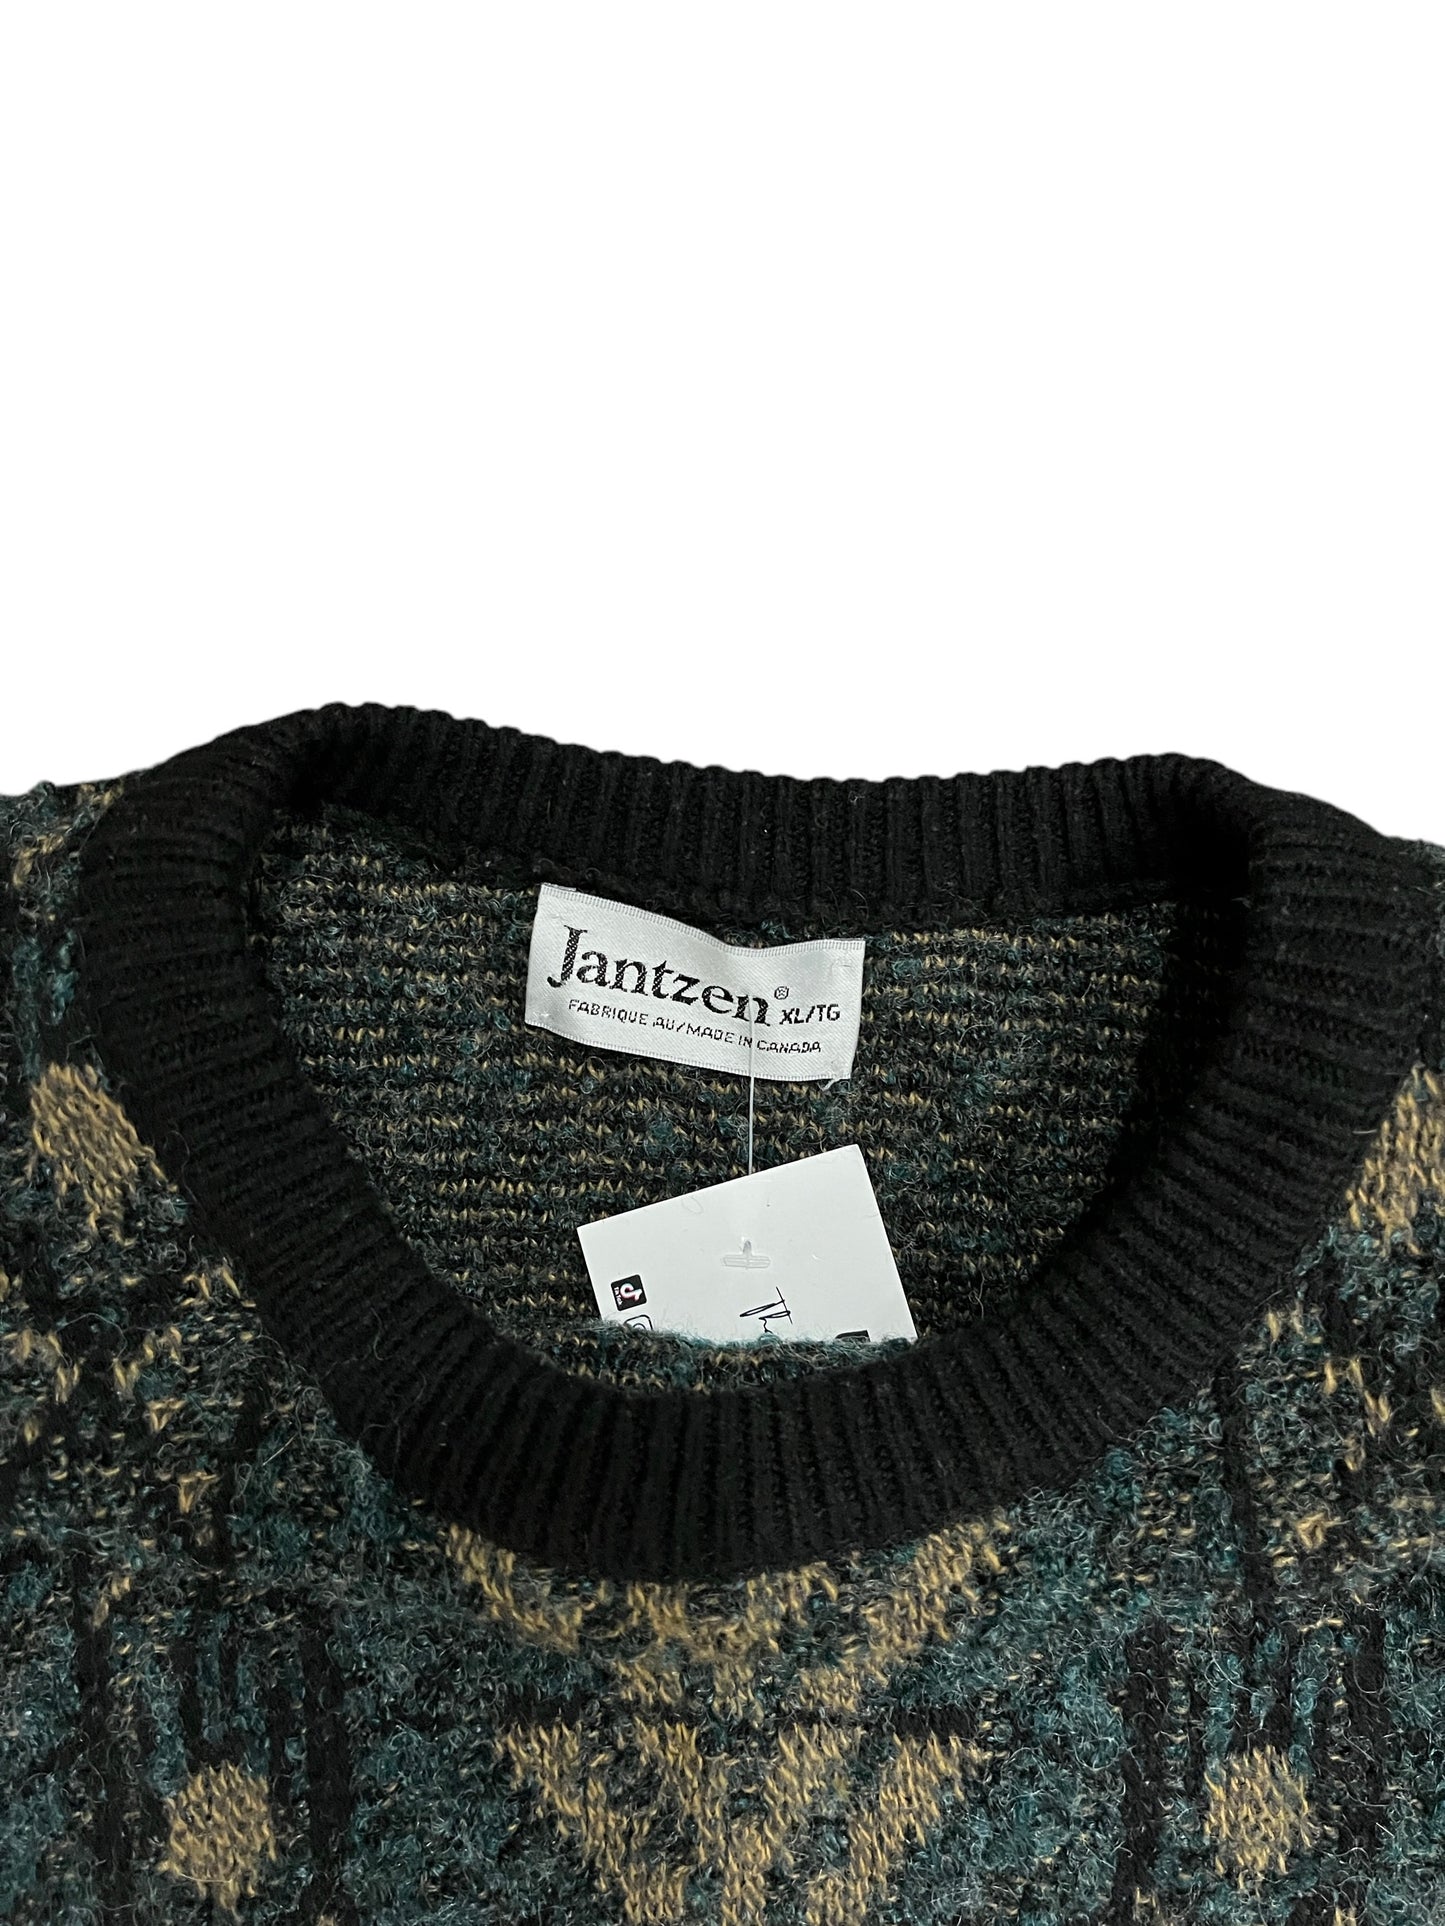 Vintage "Jantzen" Knit Sweater